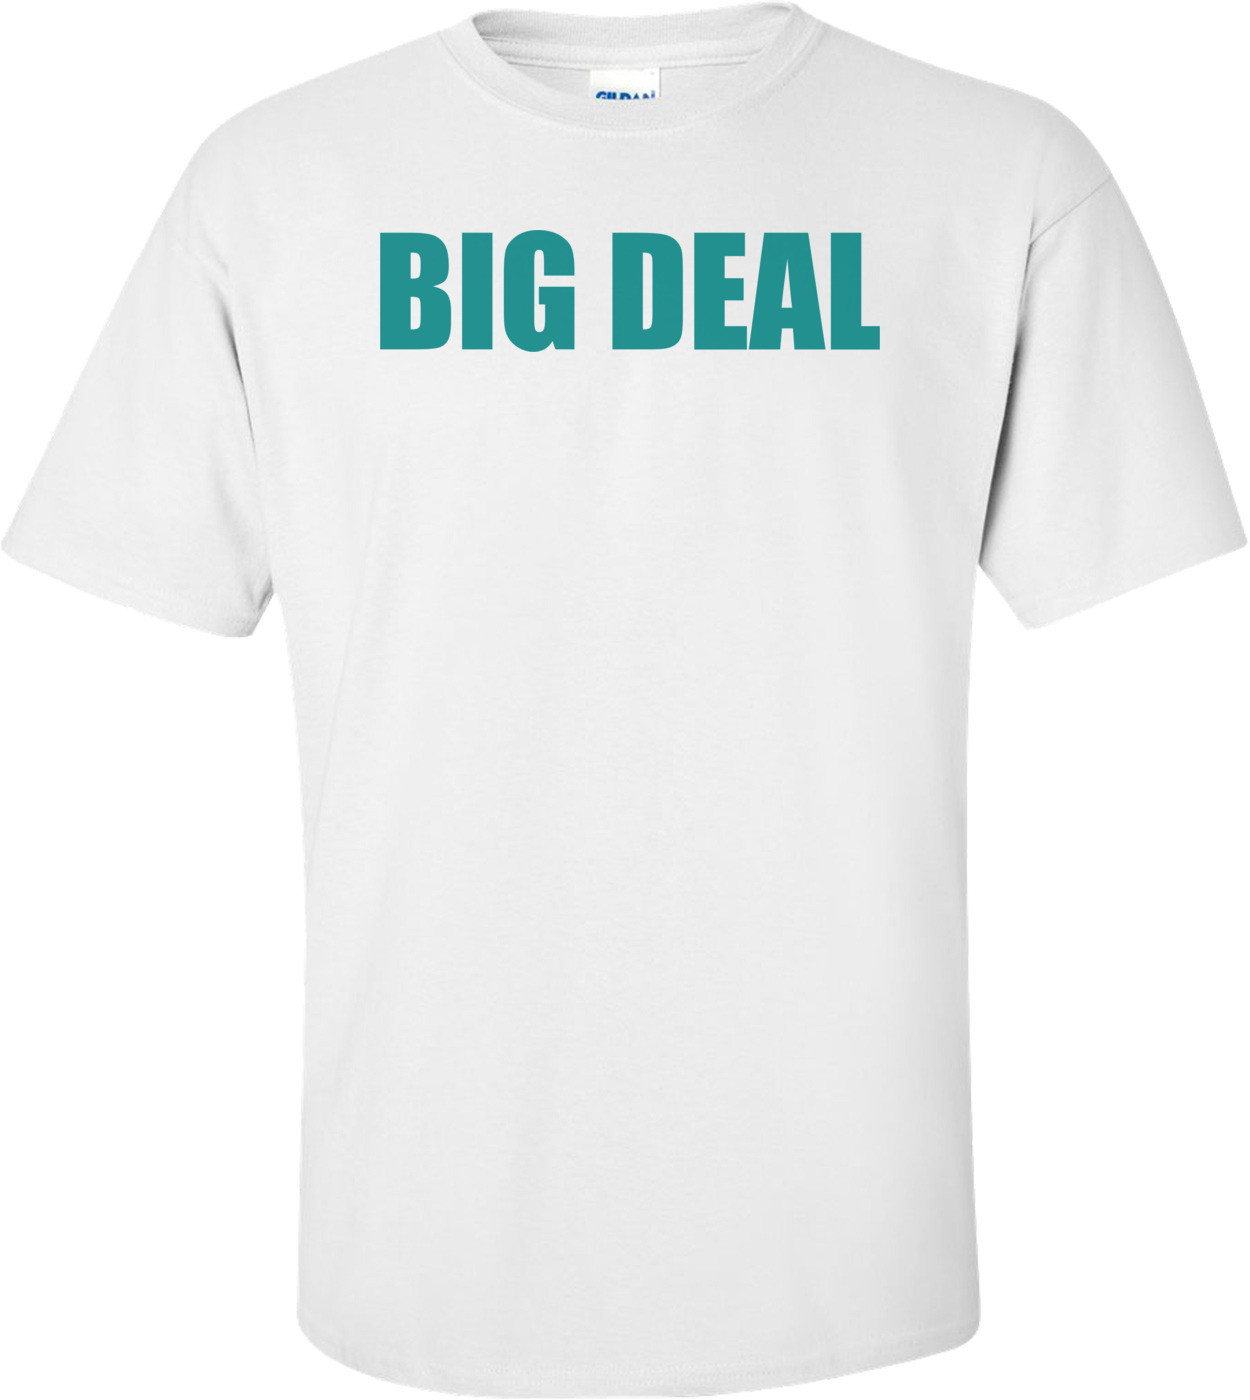 BIG DEAL Shirt